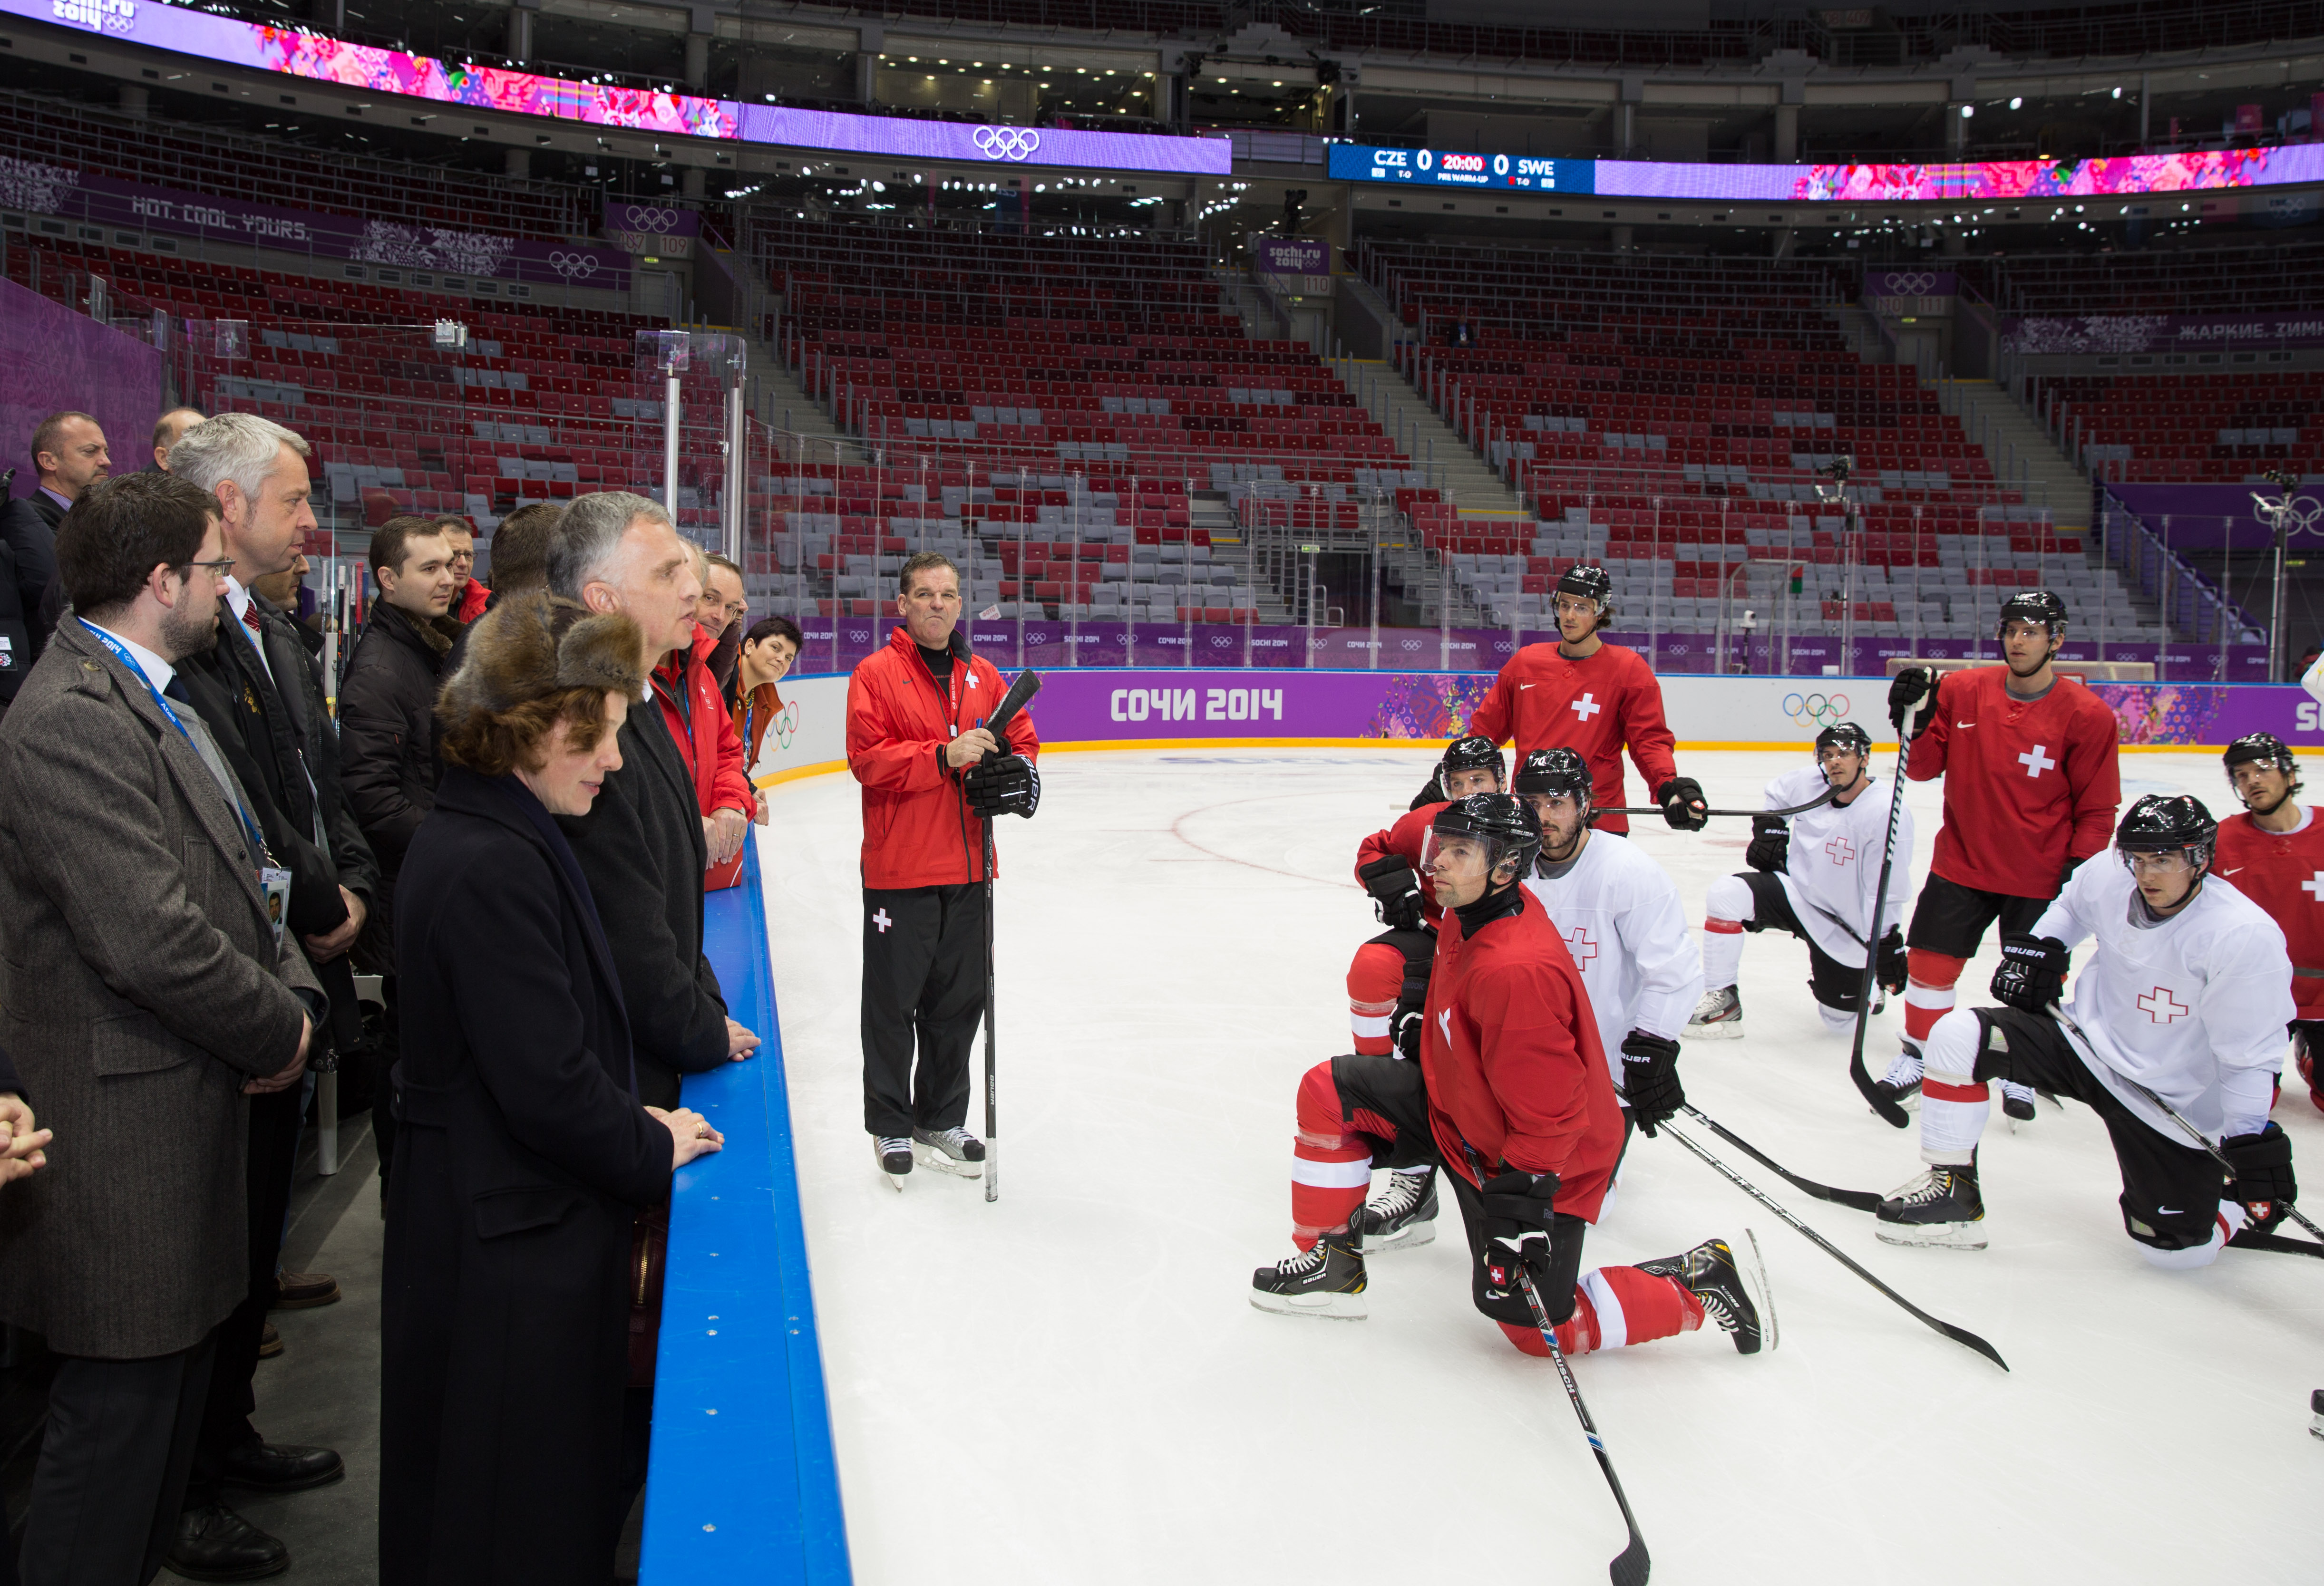 Didier Burkhalter and spouse meet the Swiss hockey team. 